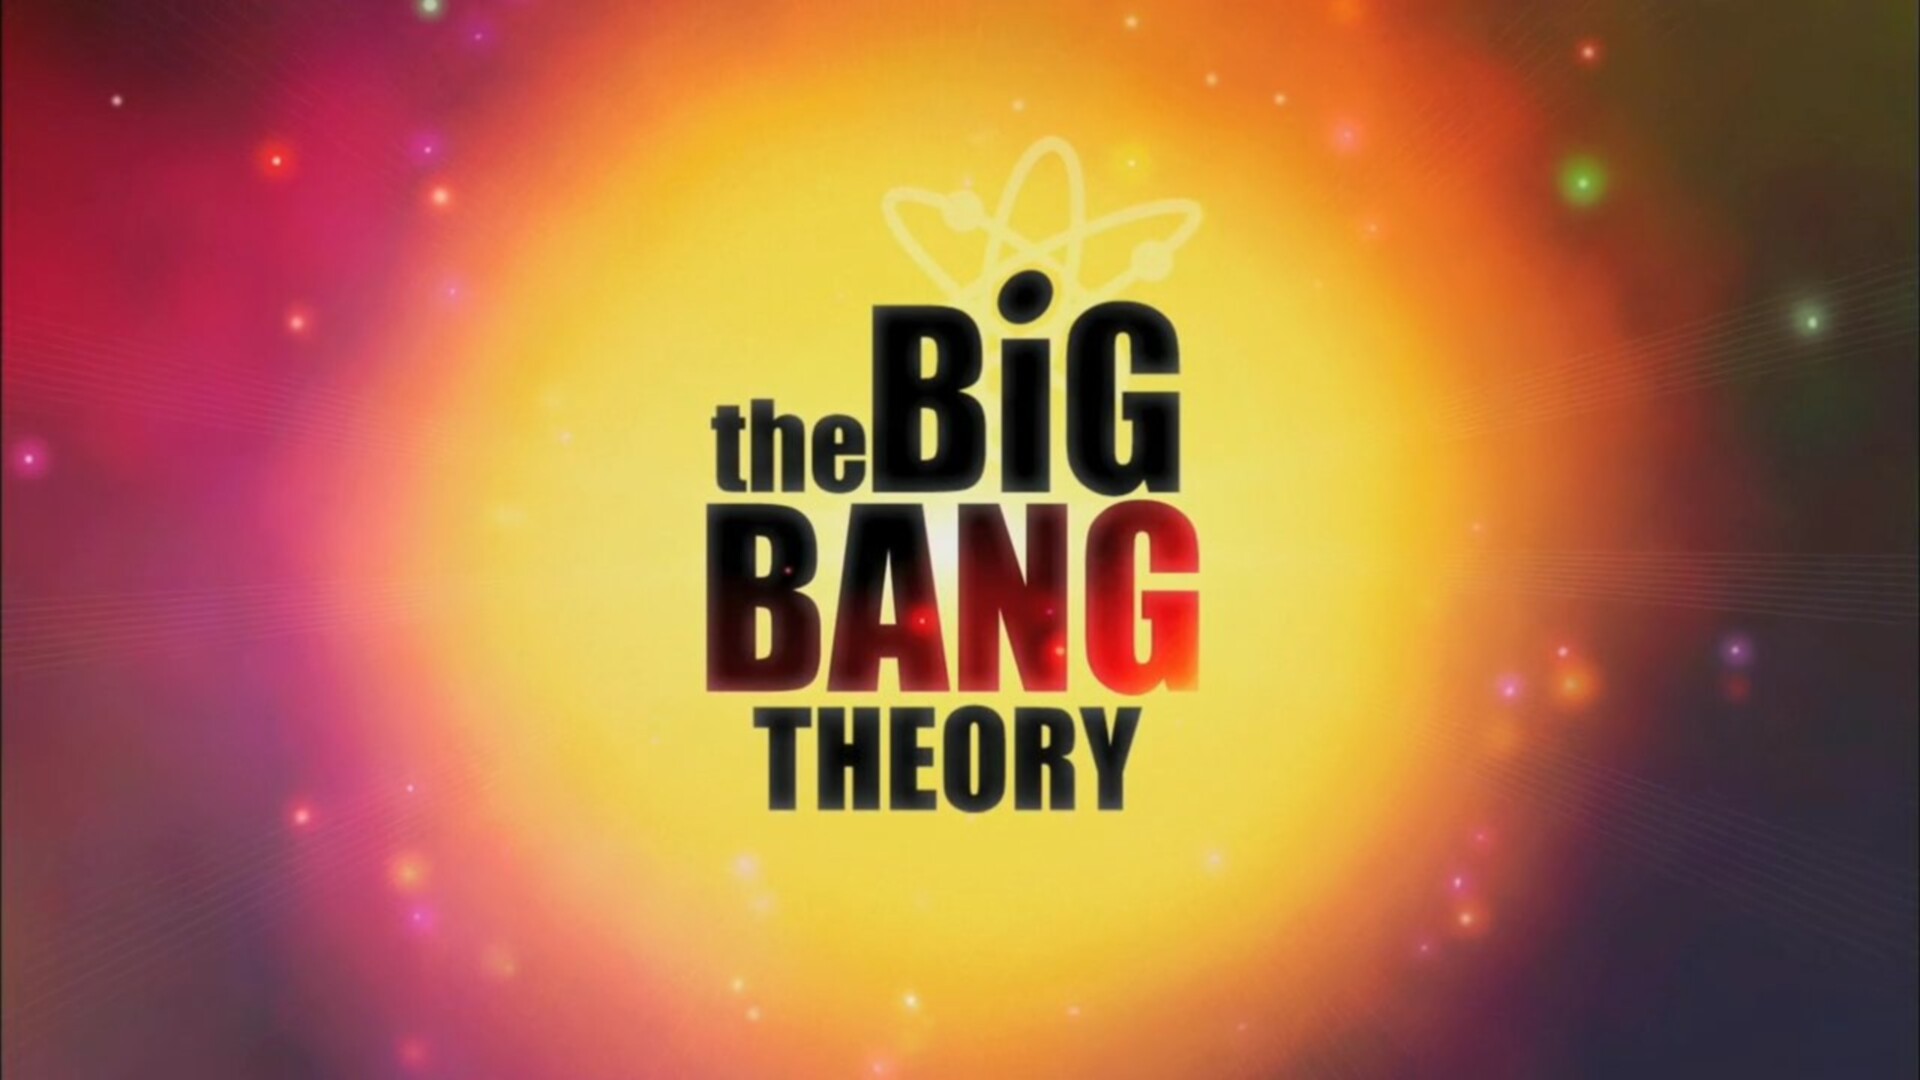 The Big Bang Theory: An American sitcom revolving around geeky room-mates Leonard and Sheldon, their beautiful neighbor Penny and their socially awkward friends Howard and Raj. 1920x1080 Full HD Wallpaper.